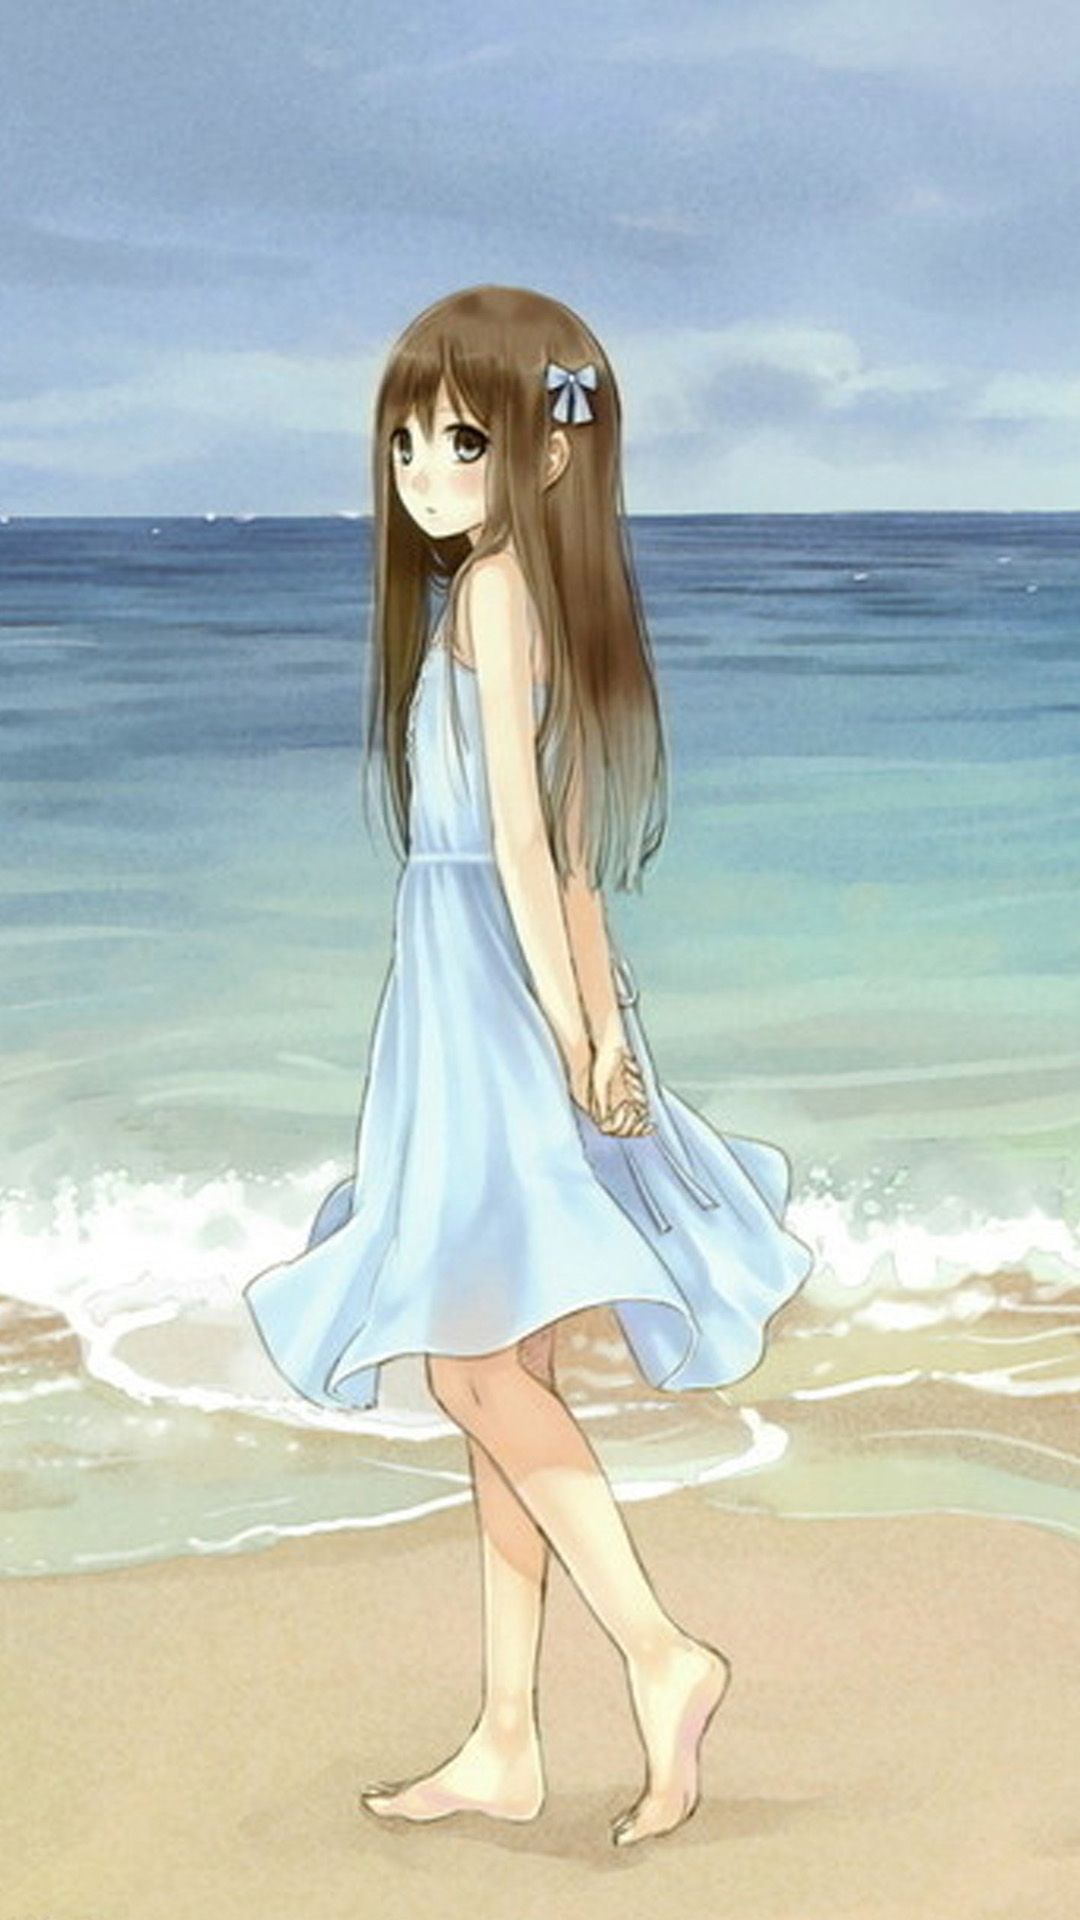 wallpaper buat android, cartoon, anime, long hair, summer, sky, cg artwork, dress, illustration, sea, watercolor paint